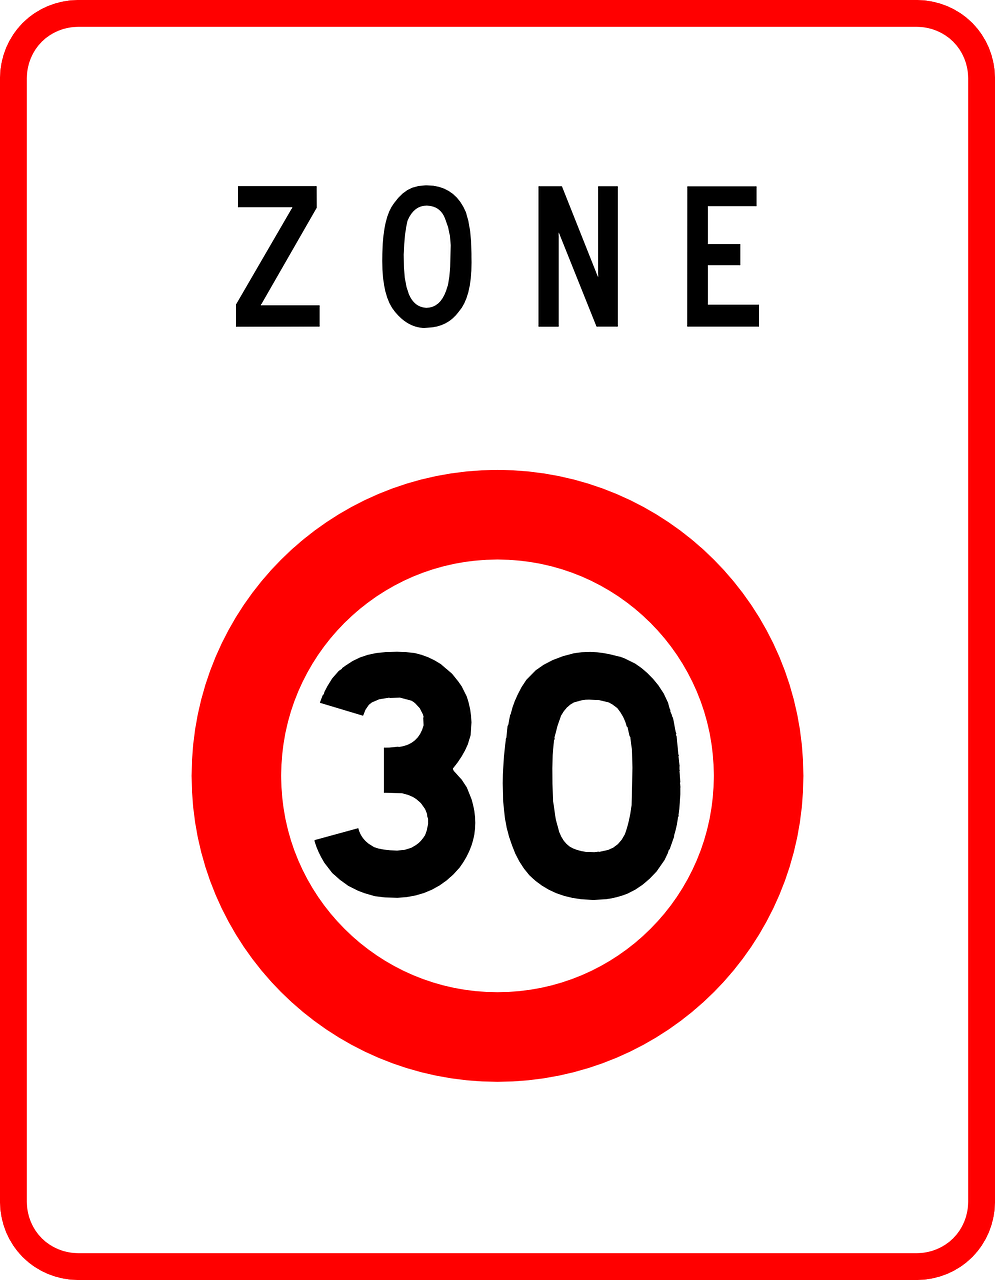 speed zone